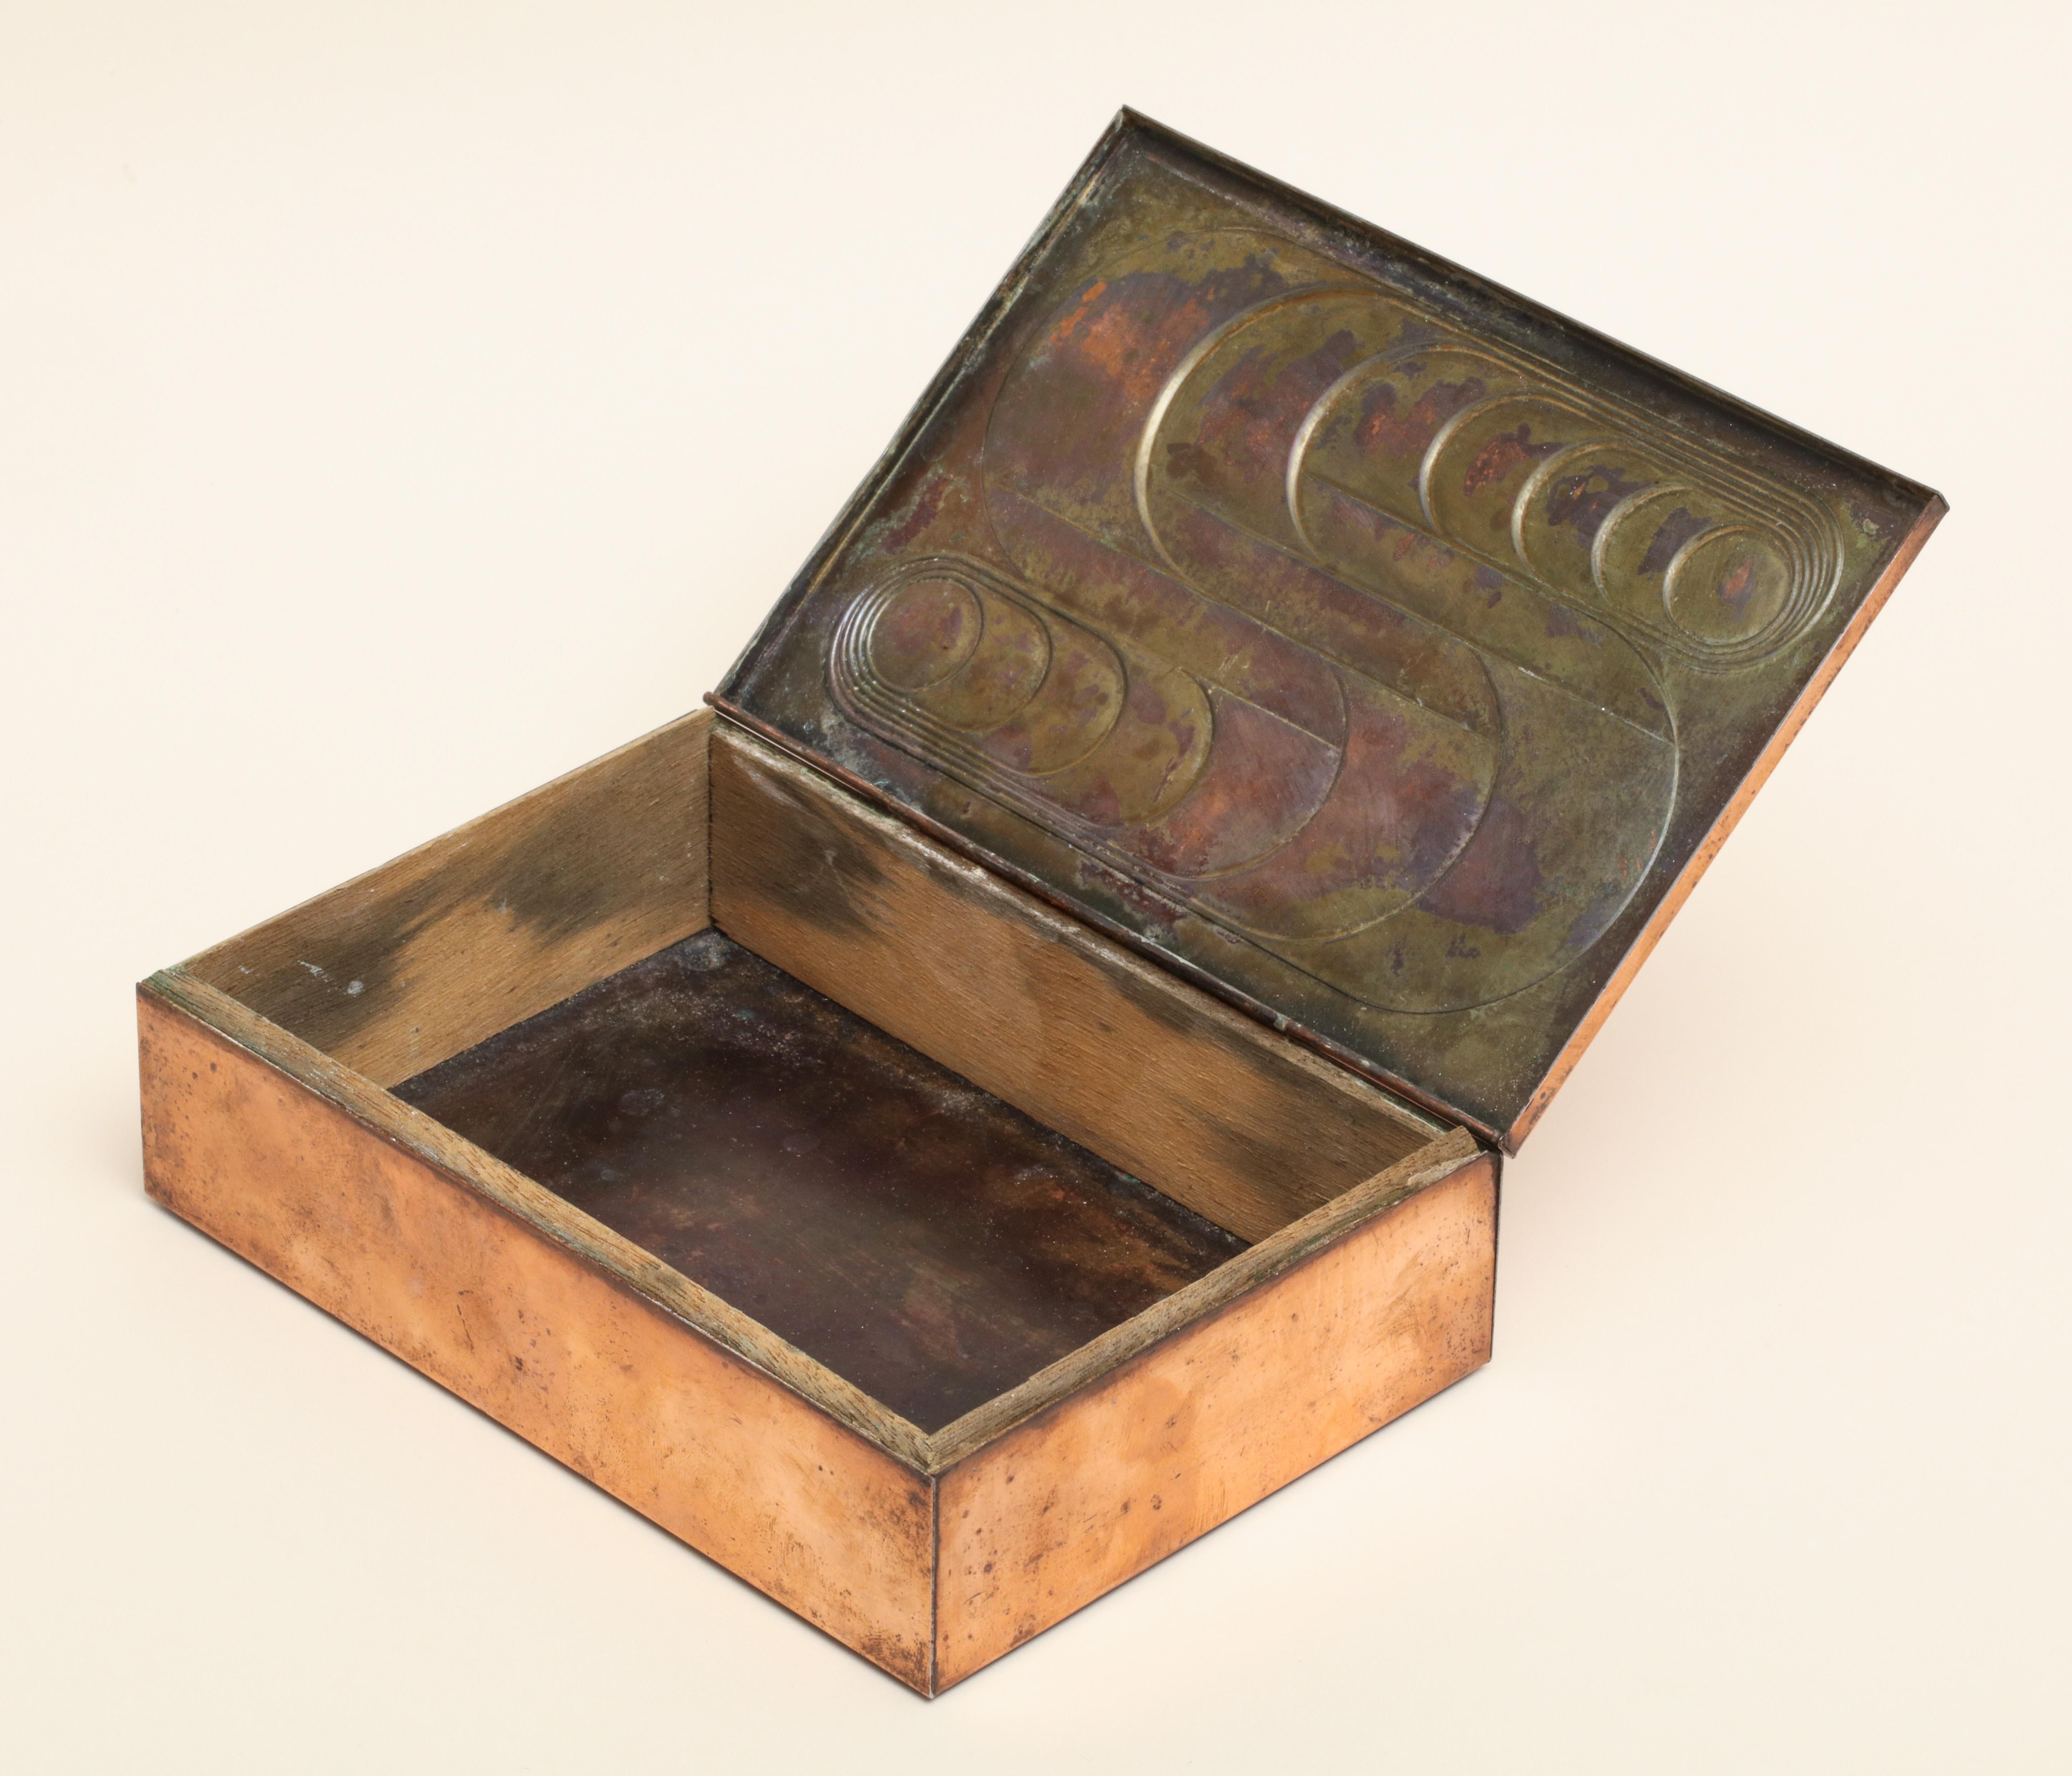 American Art Deco Hinged Copper Box with Geometric Design (20. Jahrhundert)